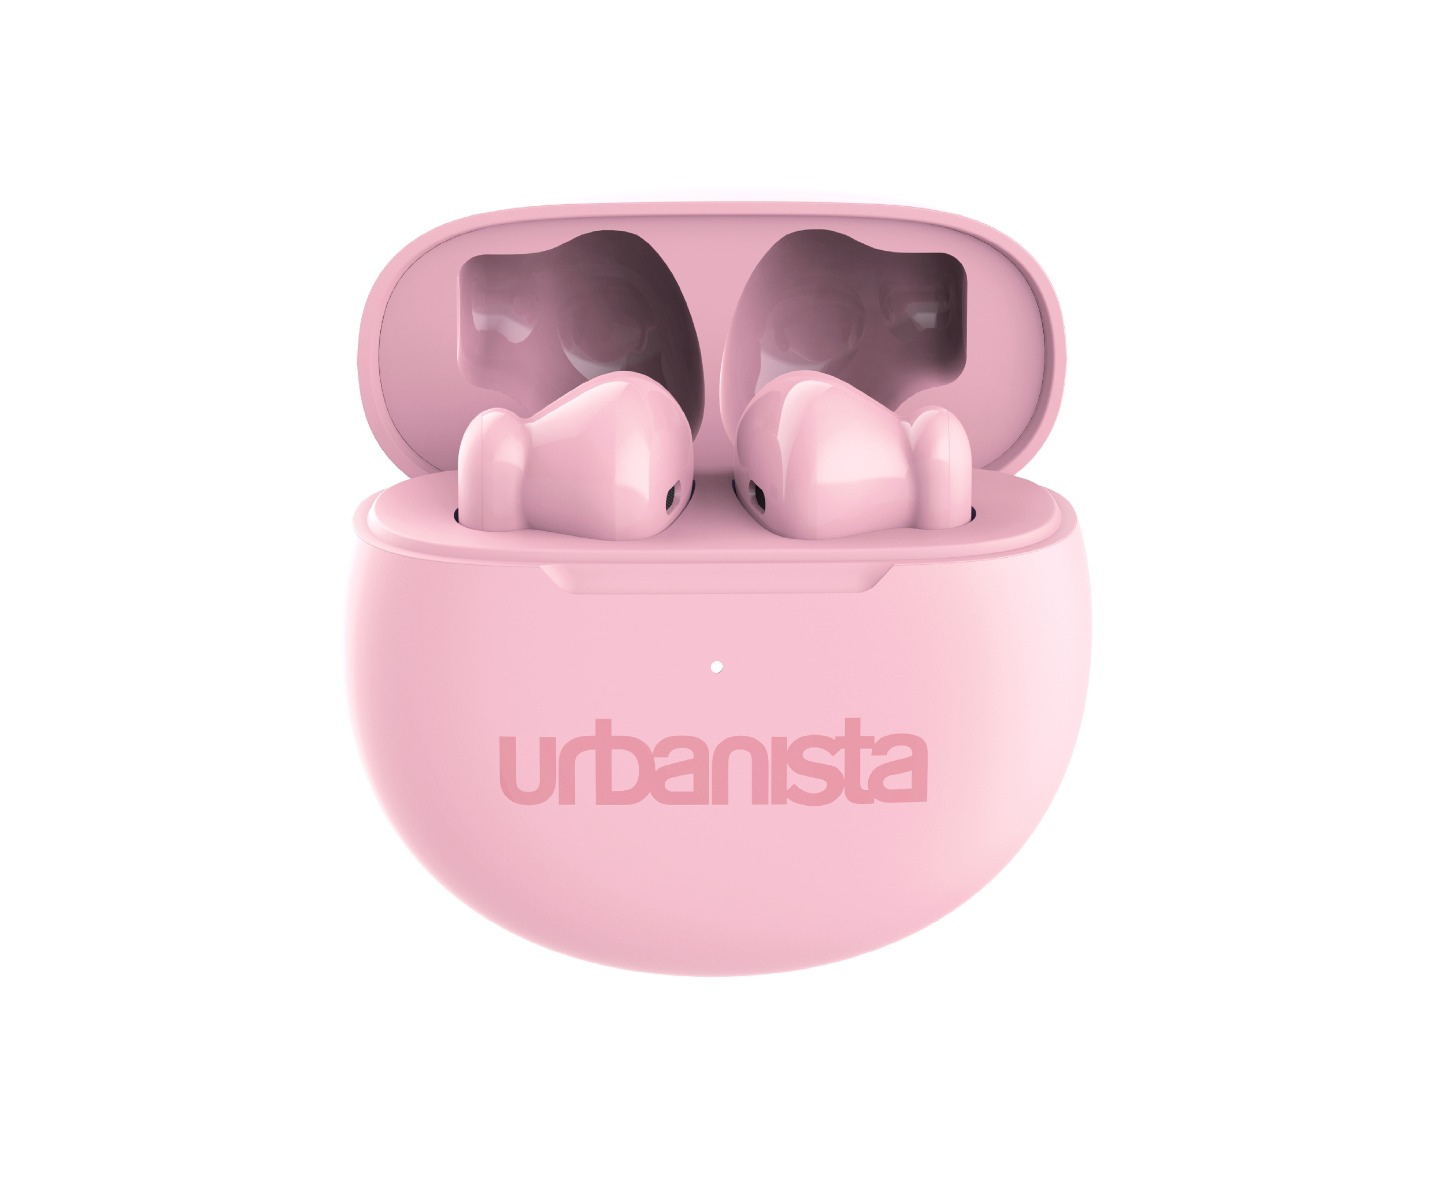 Urbanista Austin bezdrátová sluchátka pink Urbanista